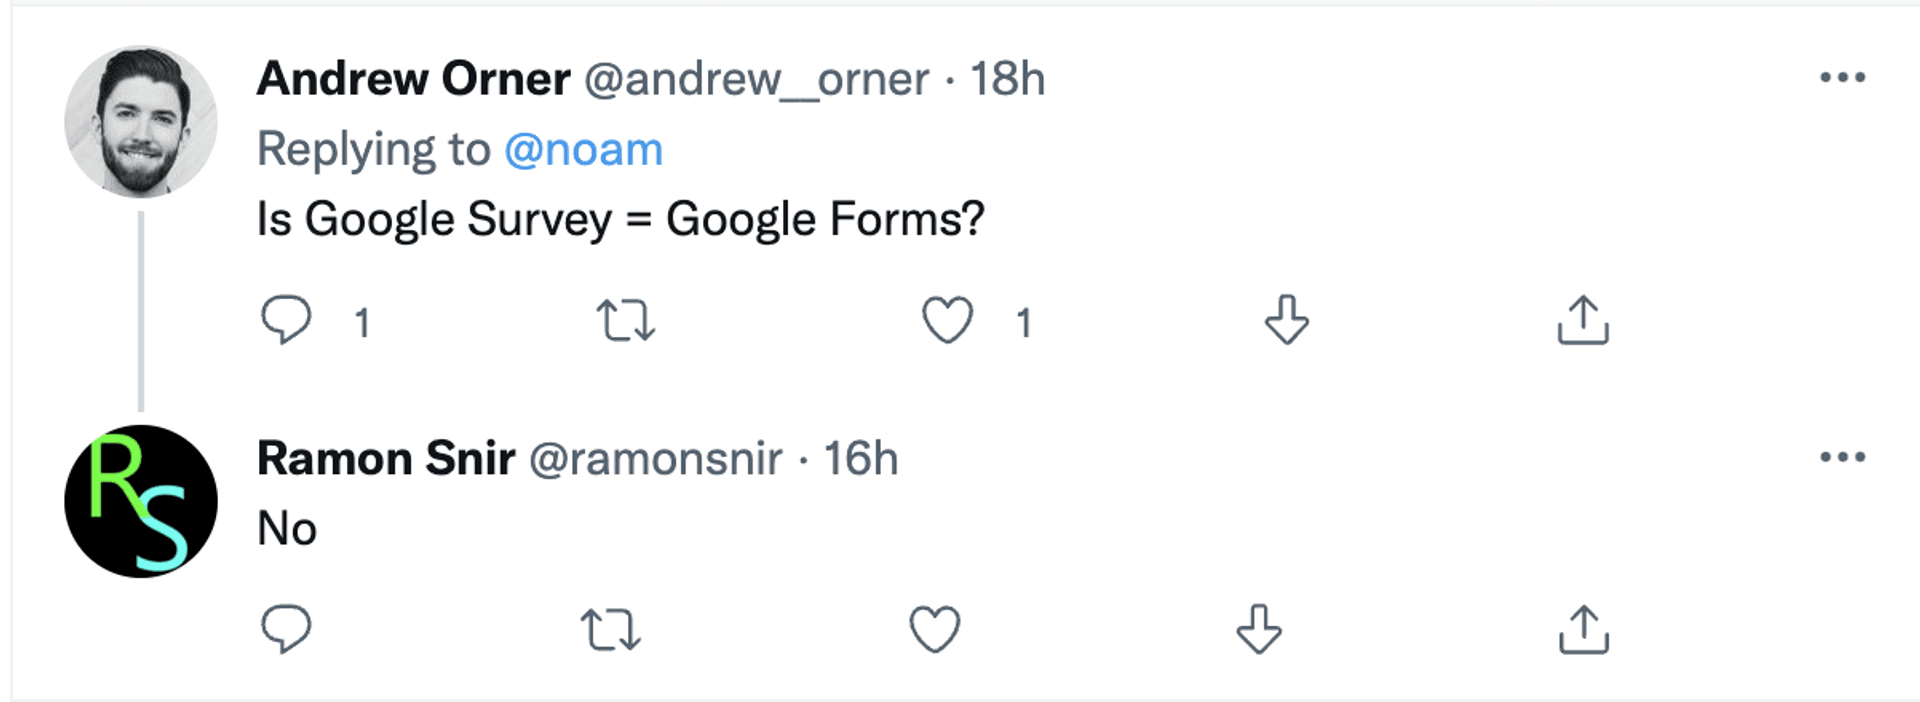 Tweet about Google Forms vs. Google Surveys